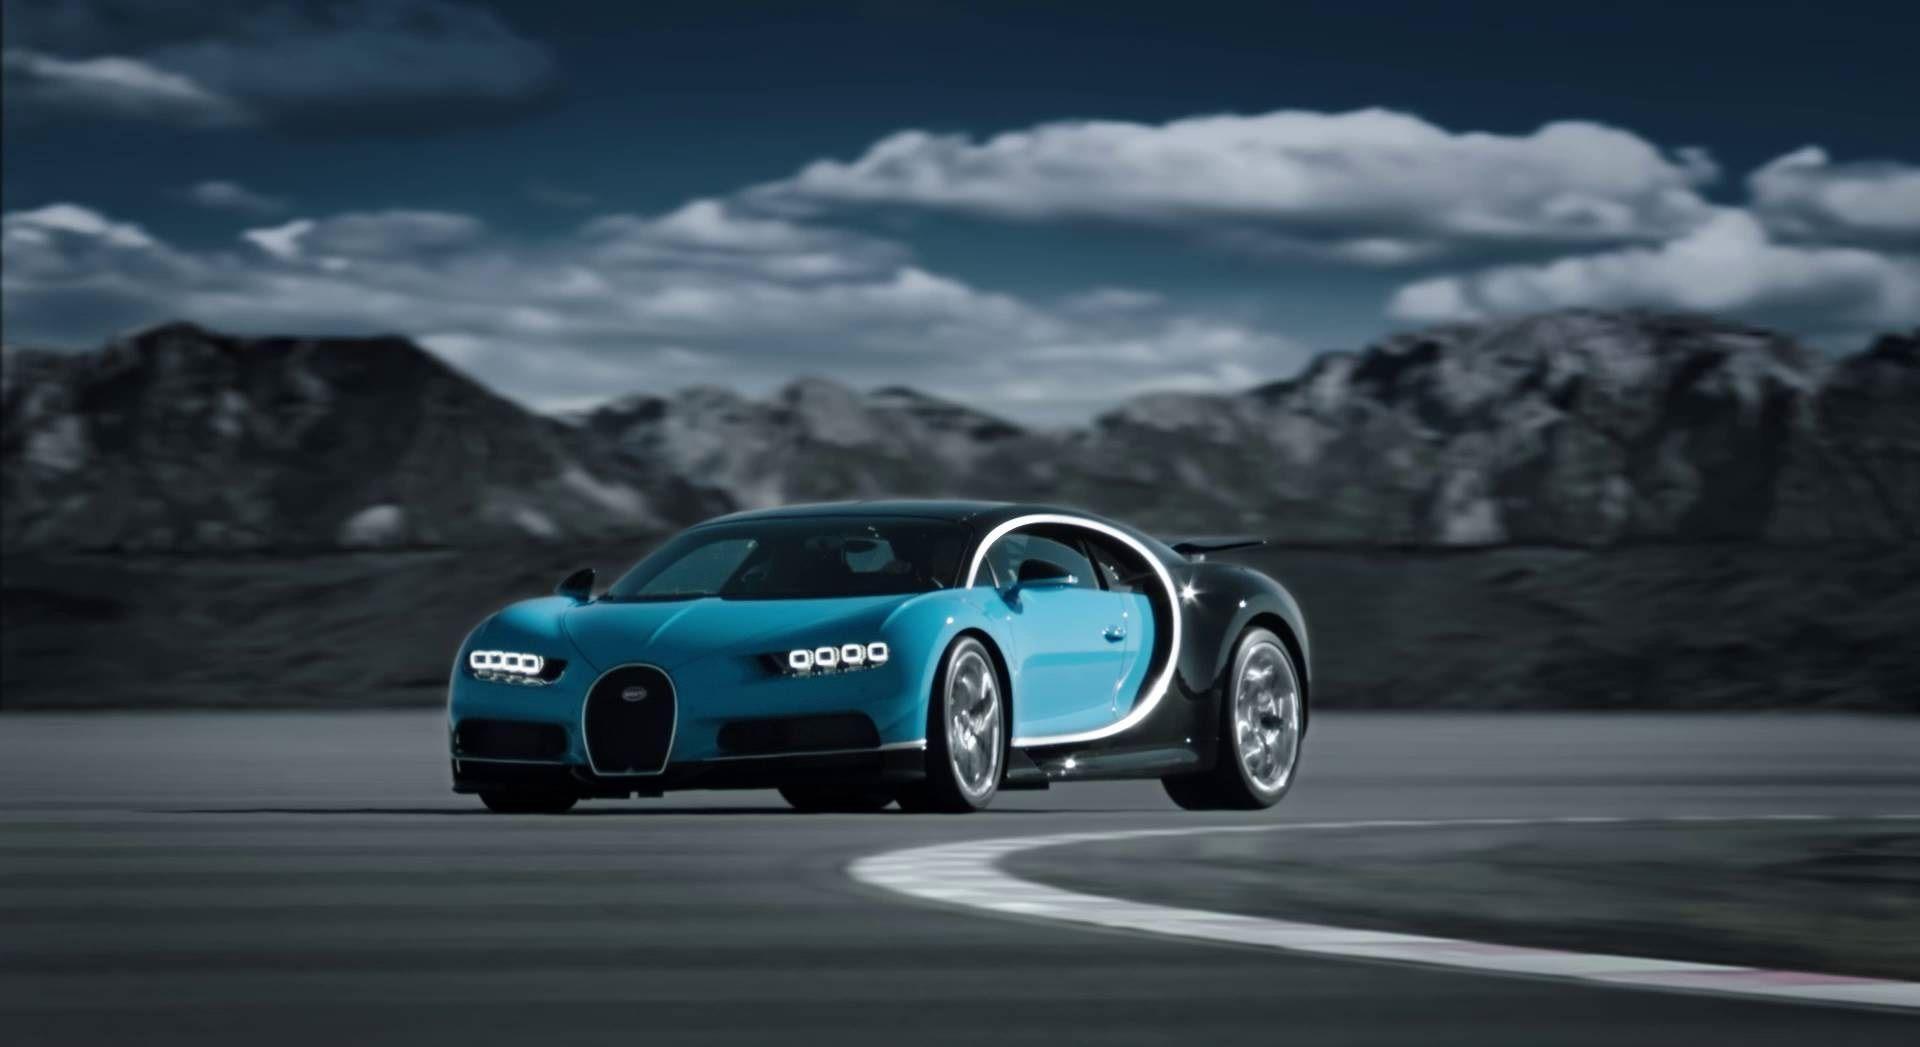 Bugatti Chiron HD Wallpaper